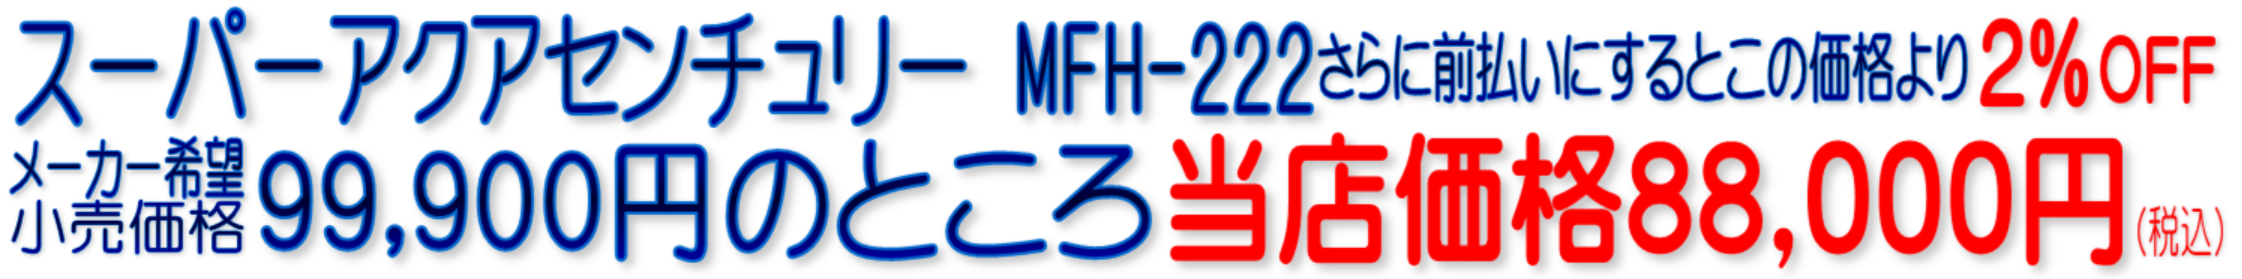 MFH-222 C-MFH-KS スーパーアクアセンチュリー